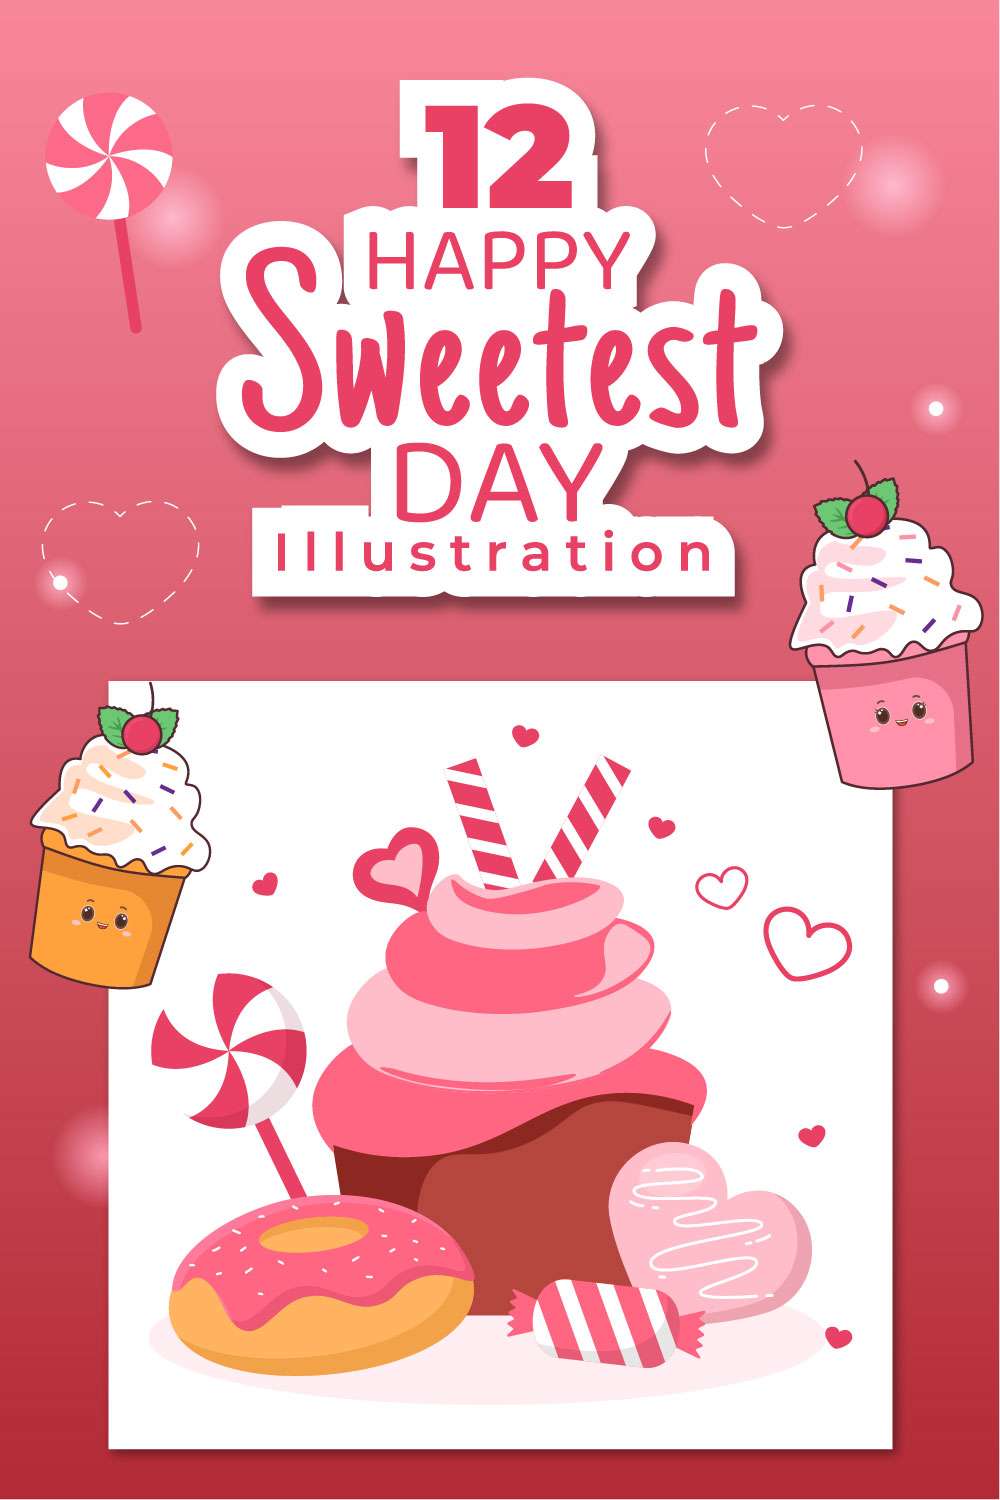 12 Happy Sweetest Day Illustration Pinterest Image.